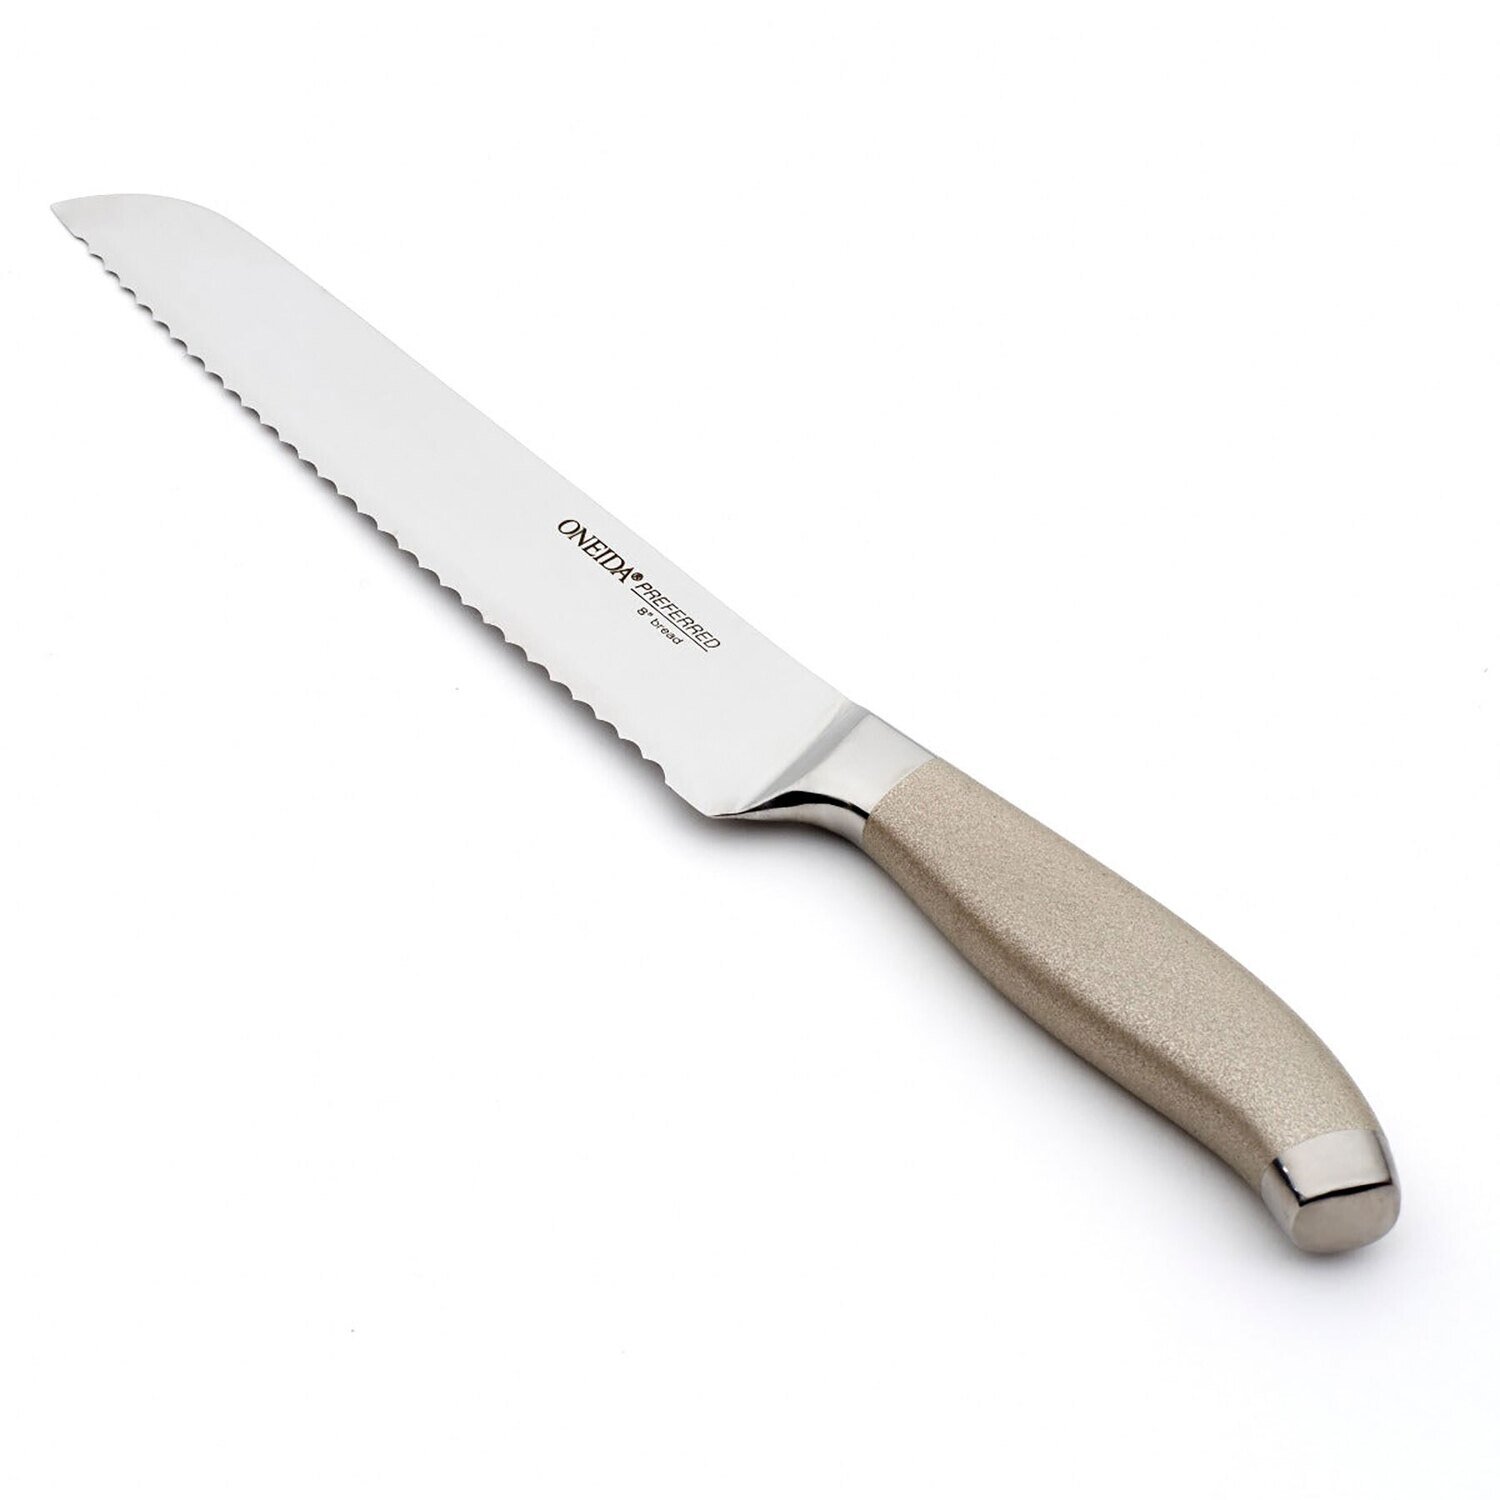 Oneida Stainless Steel Bread Knife Peened 55329L20